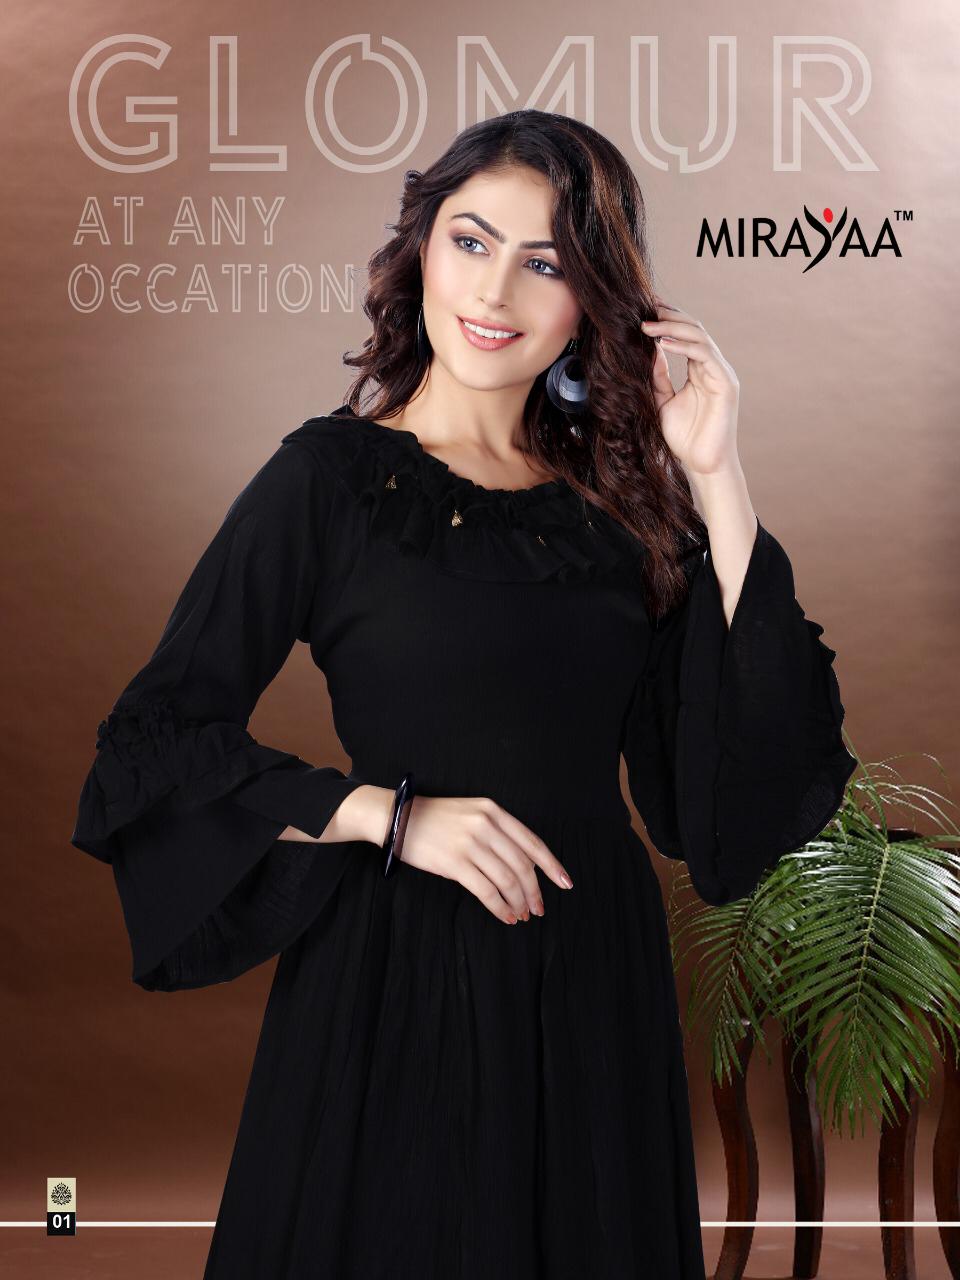 Mirayaa cham cham elegant Party Wear fancy Kurties Collection